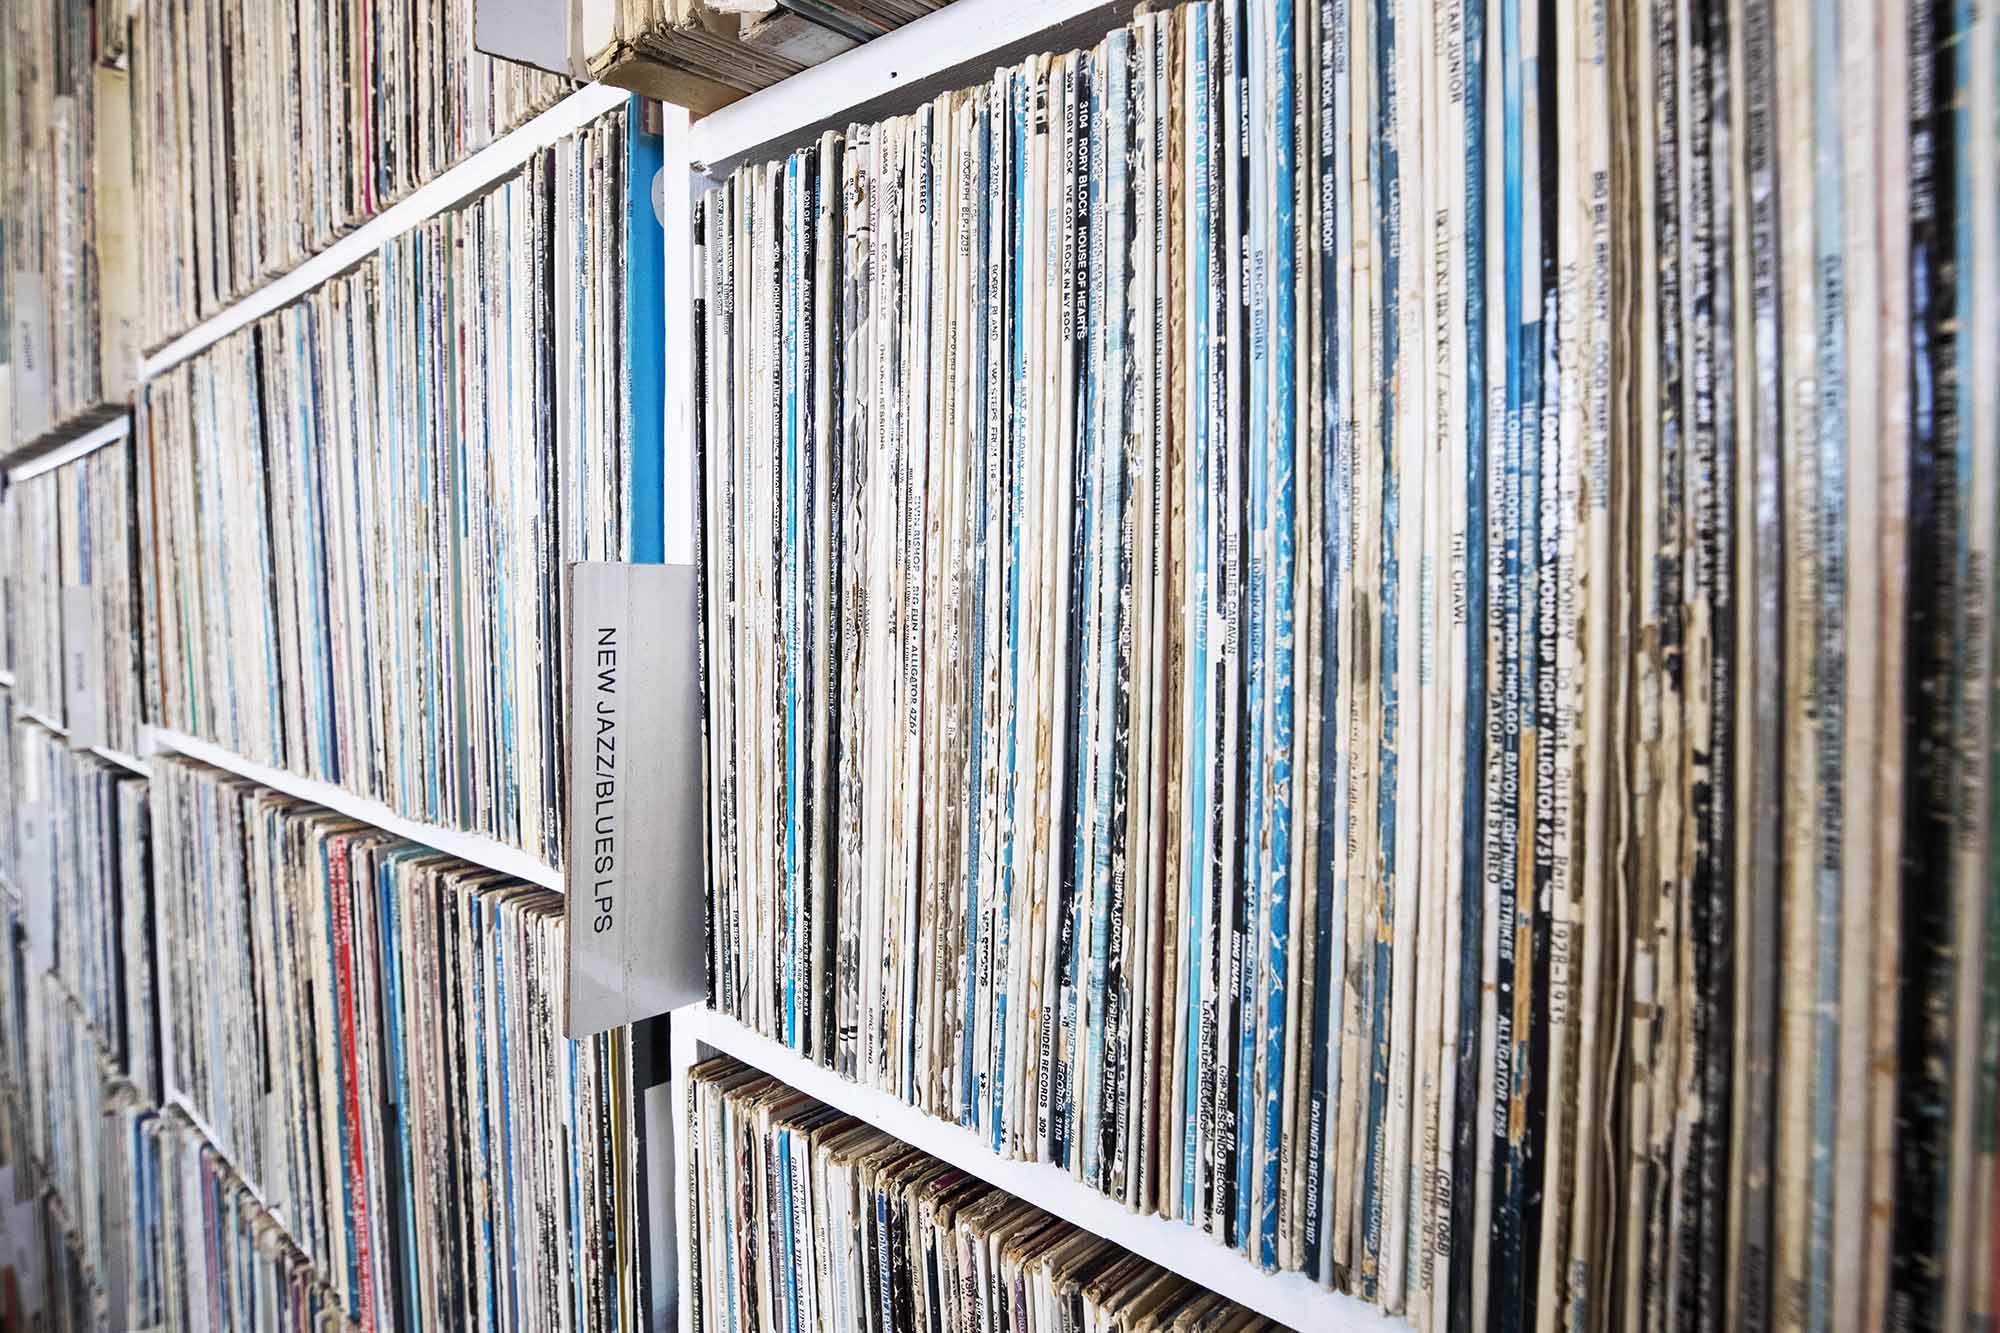 bookshelves filled with Vinyl records